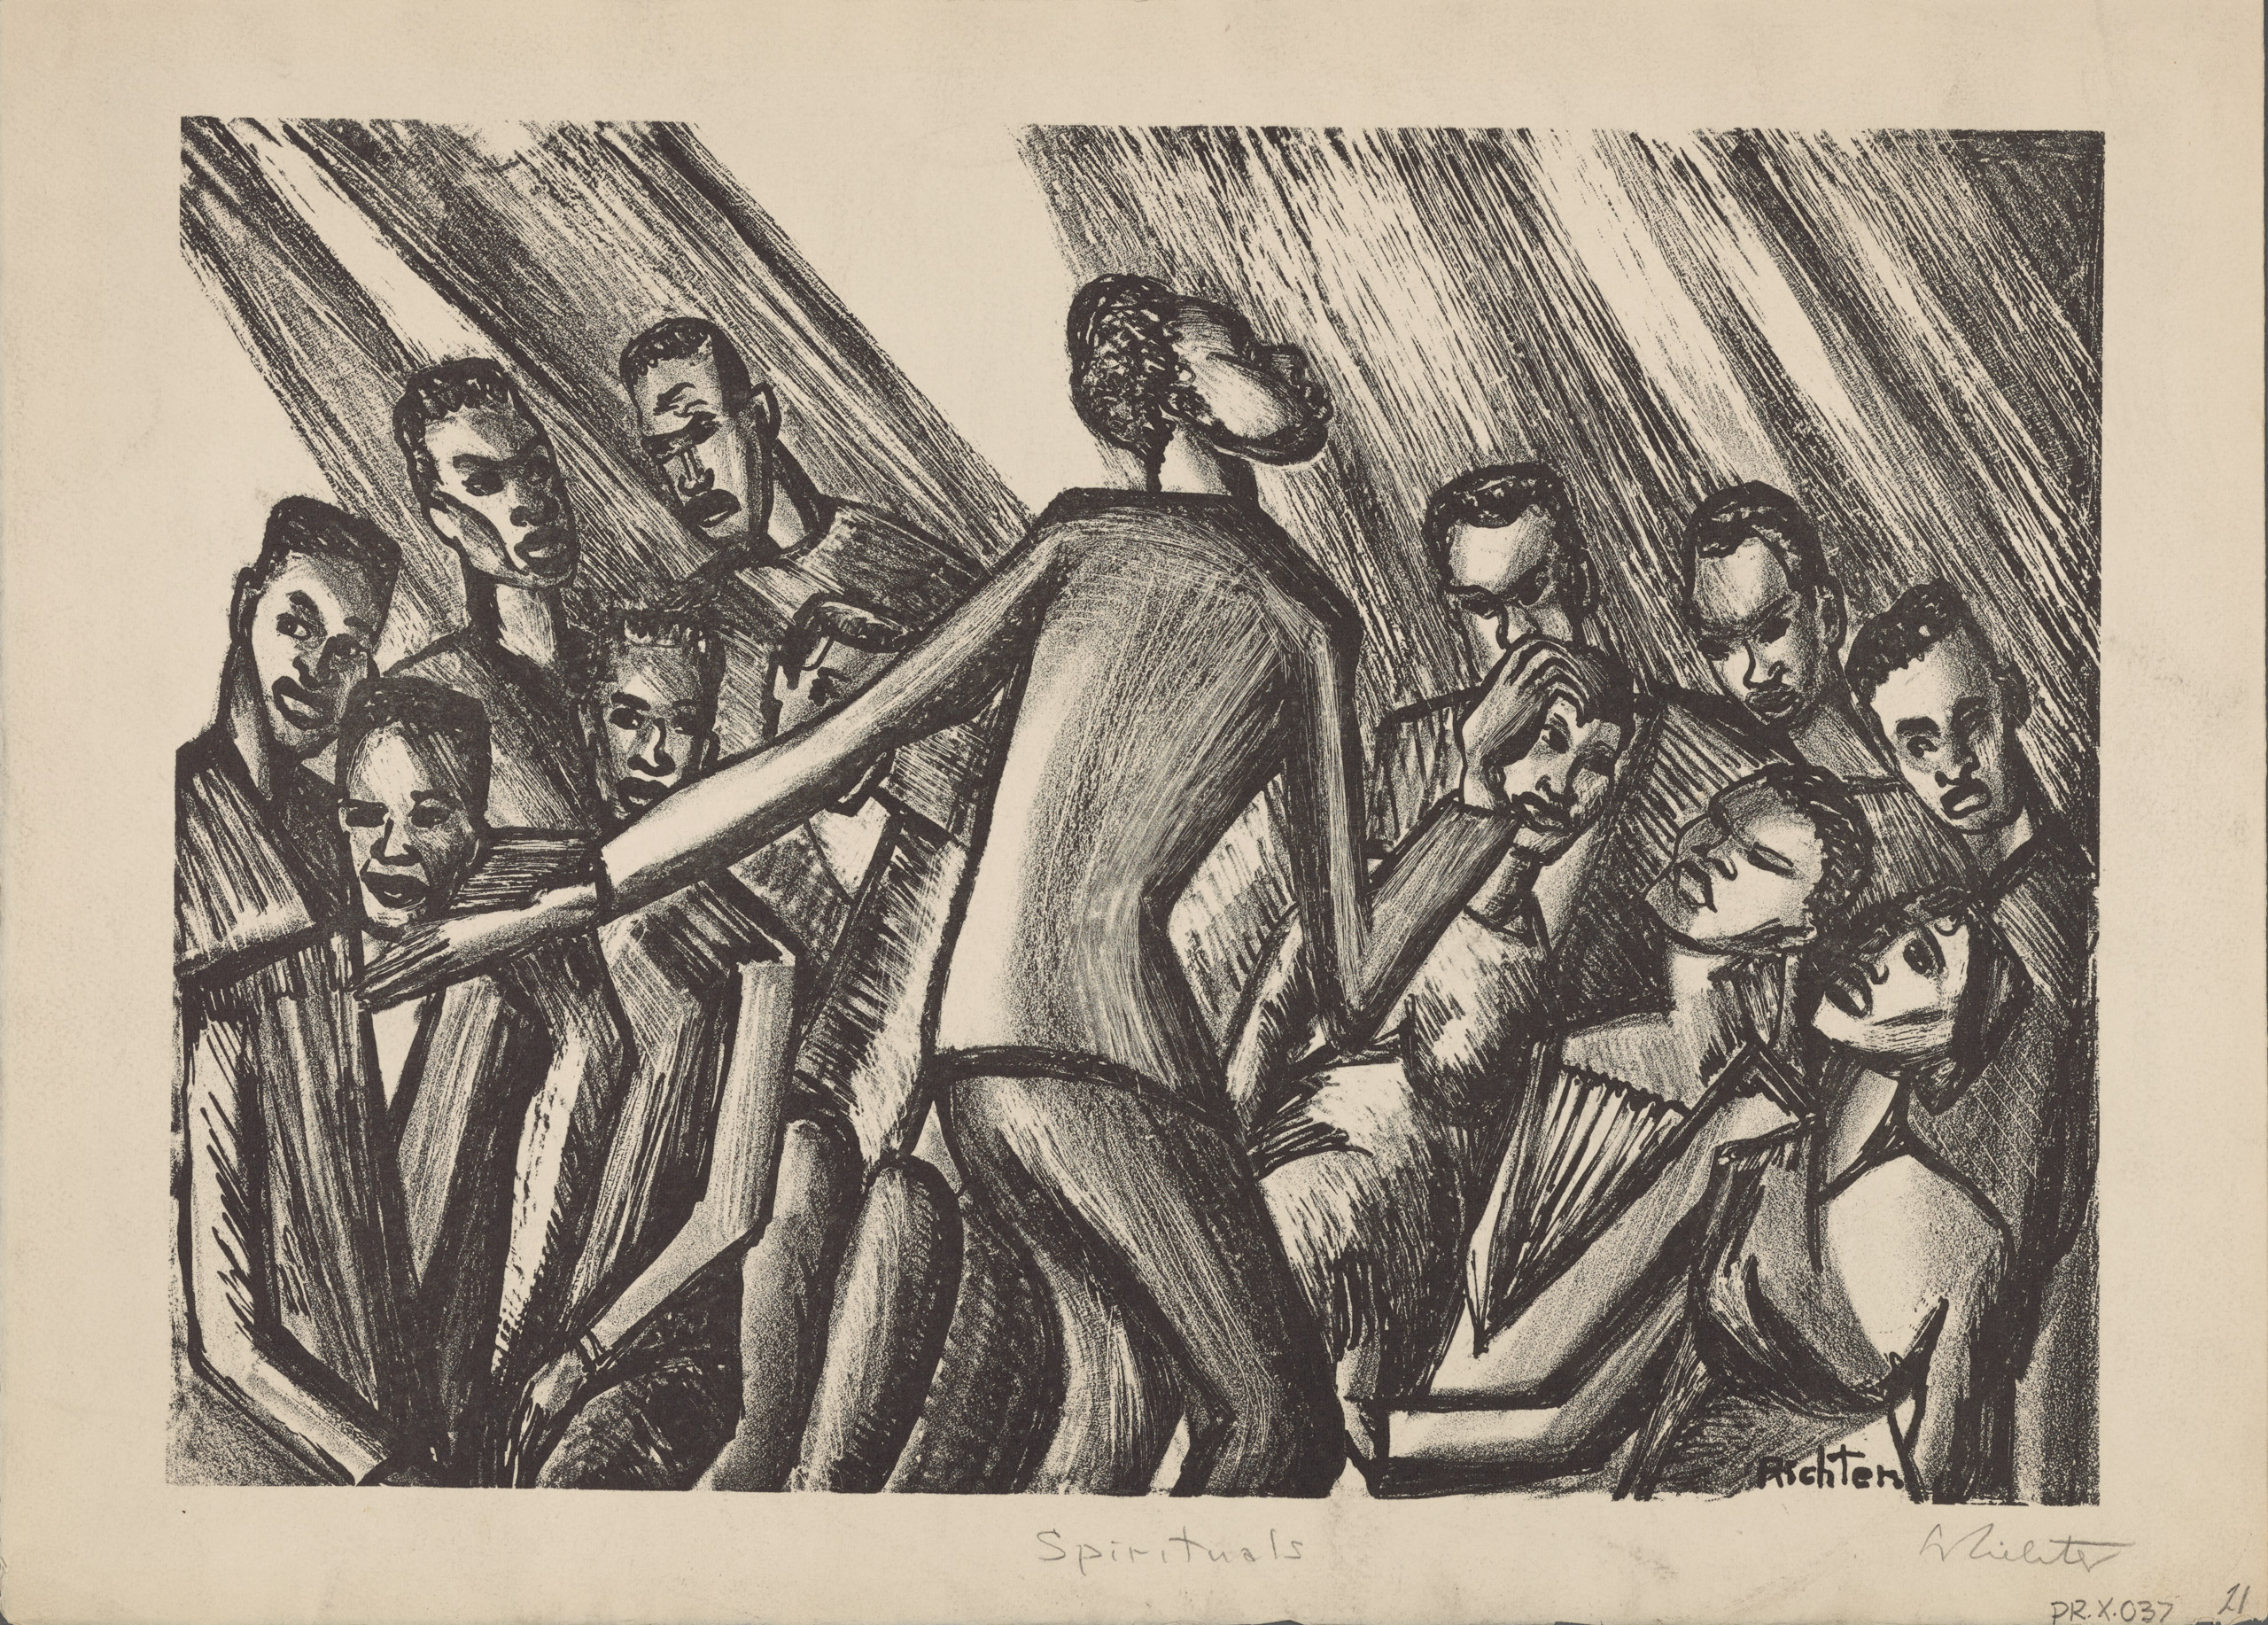 Spirituals  by Lillian Richter from the Works Progress Administration (WPA) Art, circa 1935-1943.